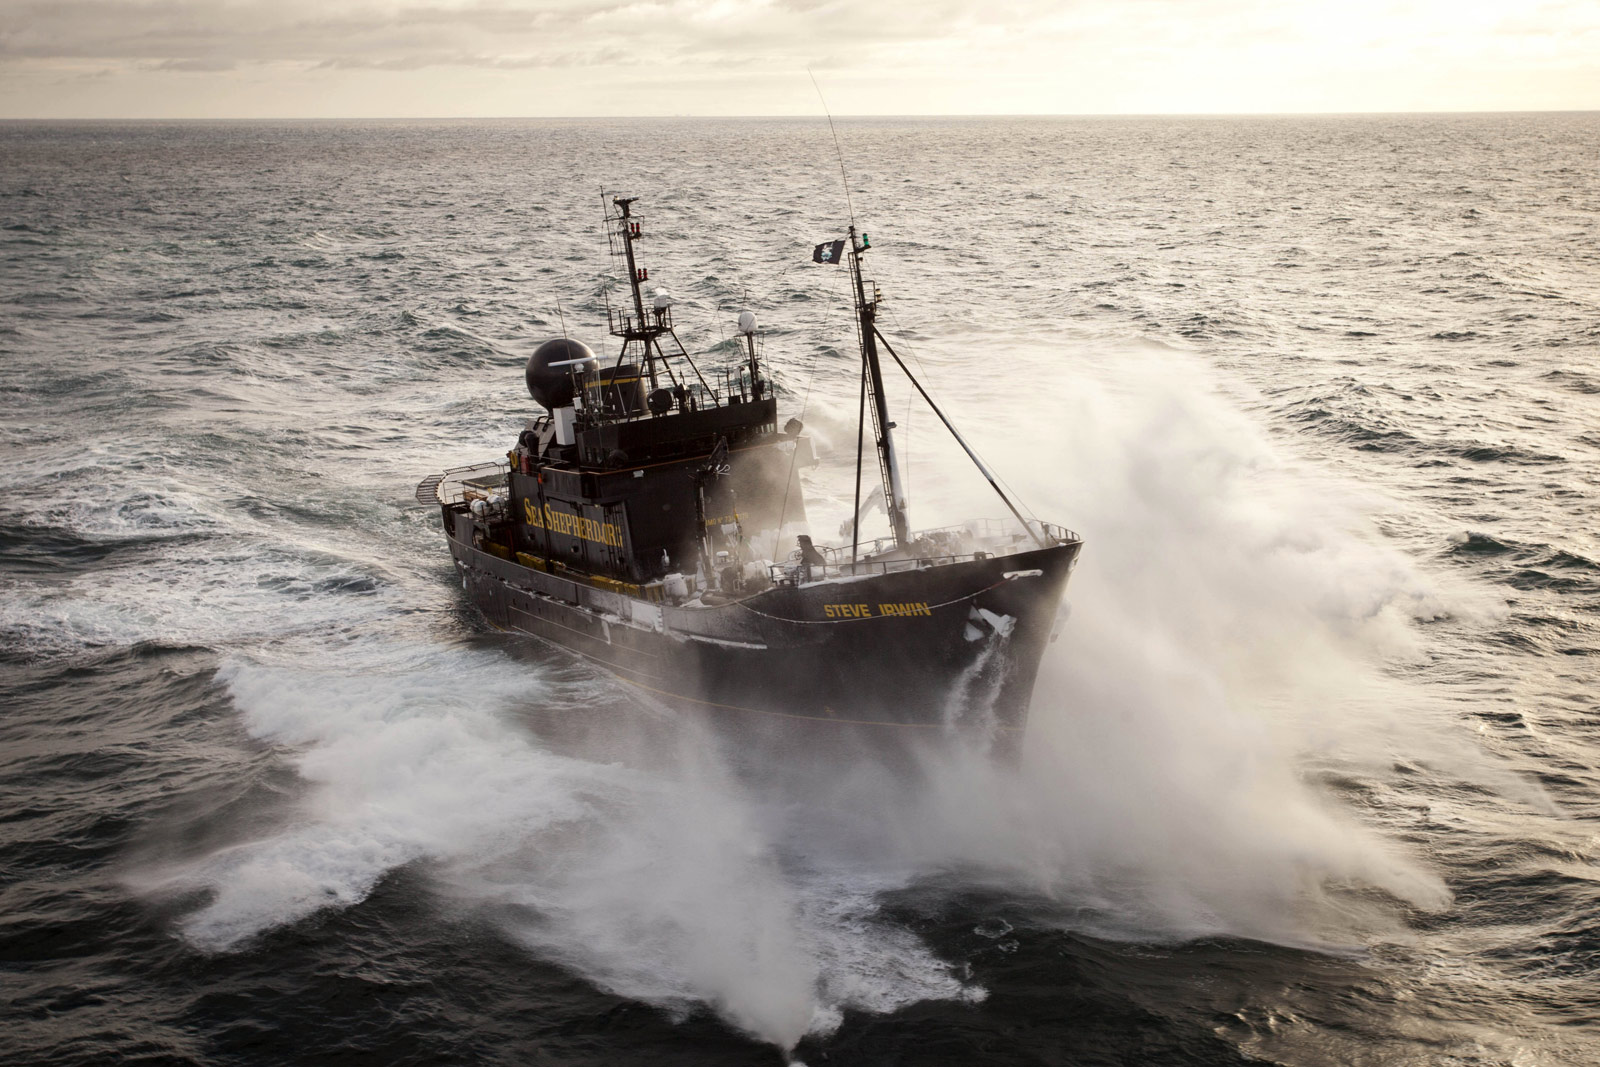 Le Steve Irwin, navire amiral de Sea Shepherd / photo Sea Shepherd